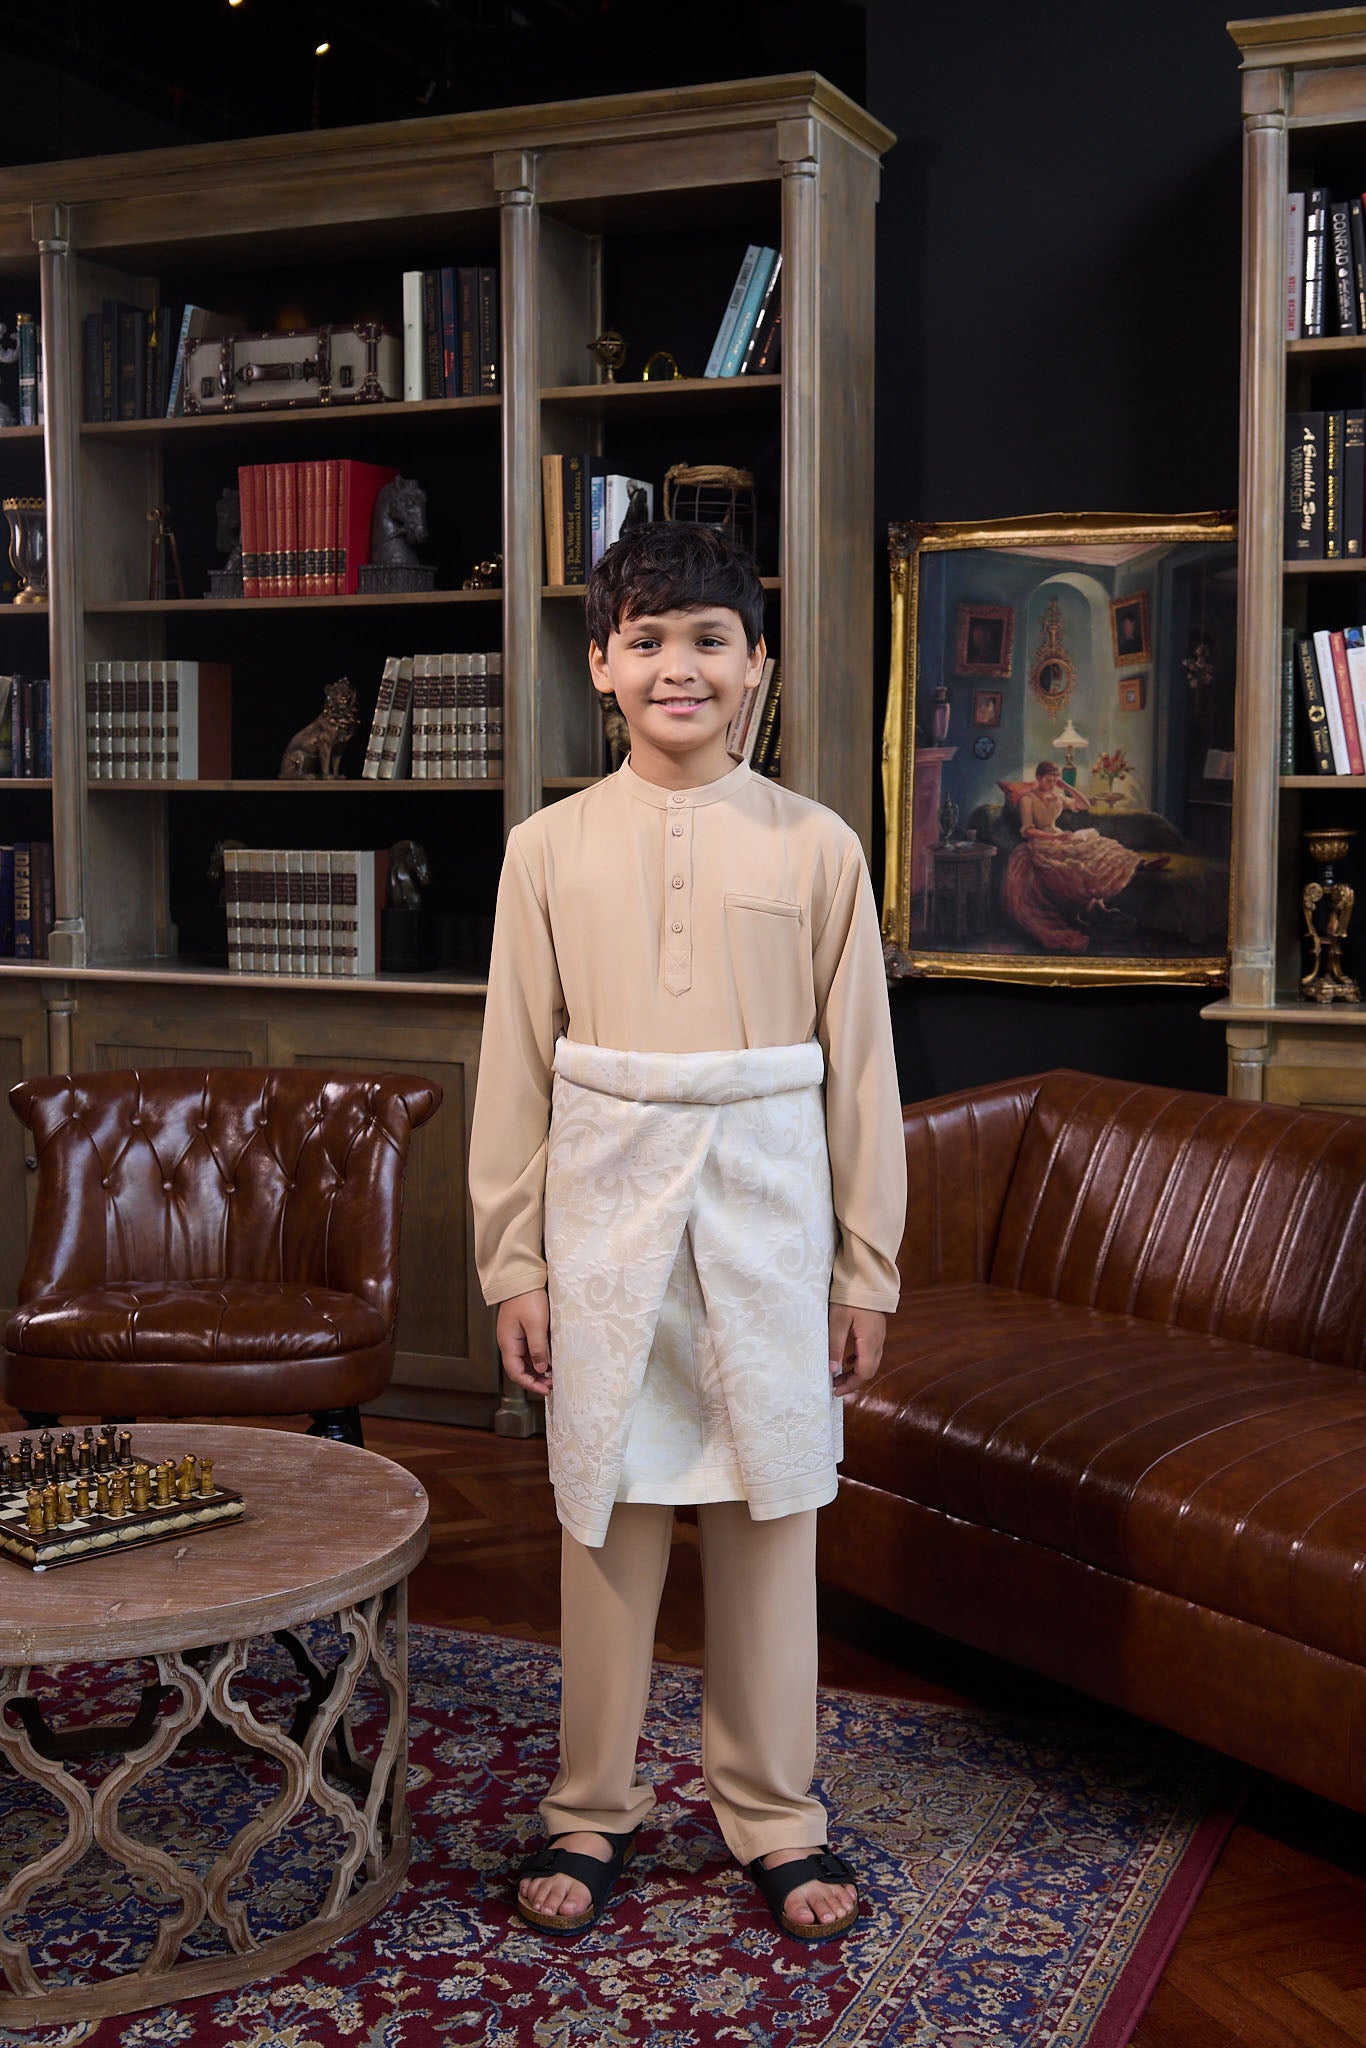 The Warisan Raya Boy Baju Melayu Set Caramel